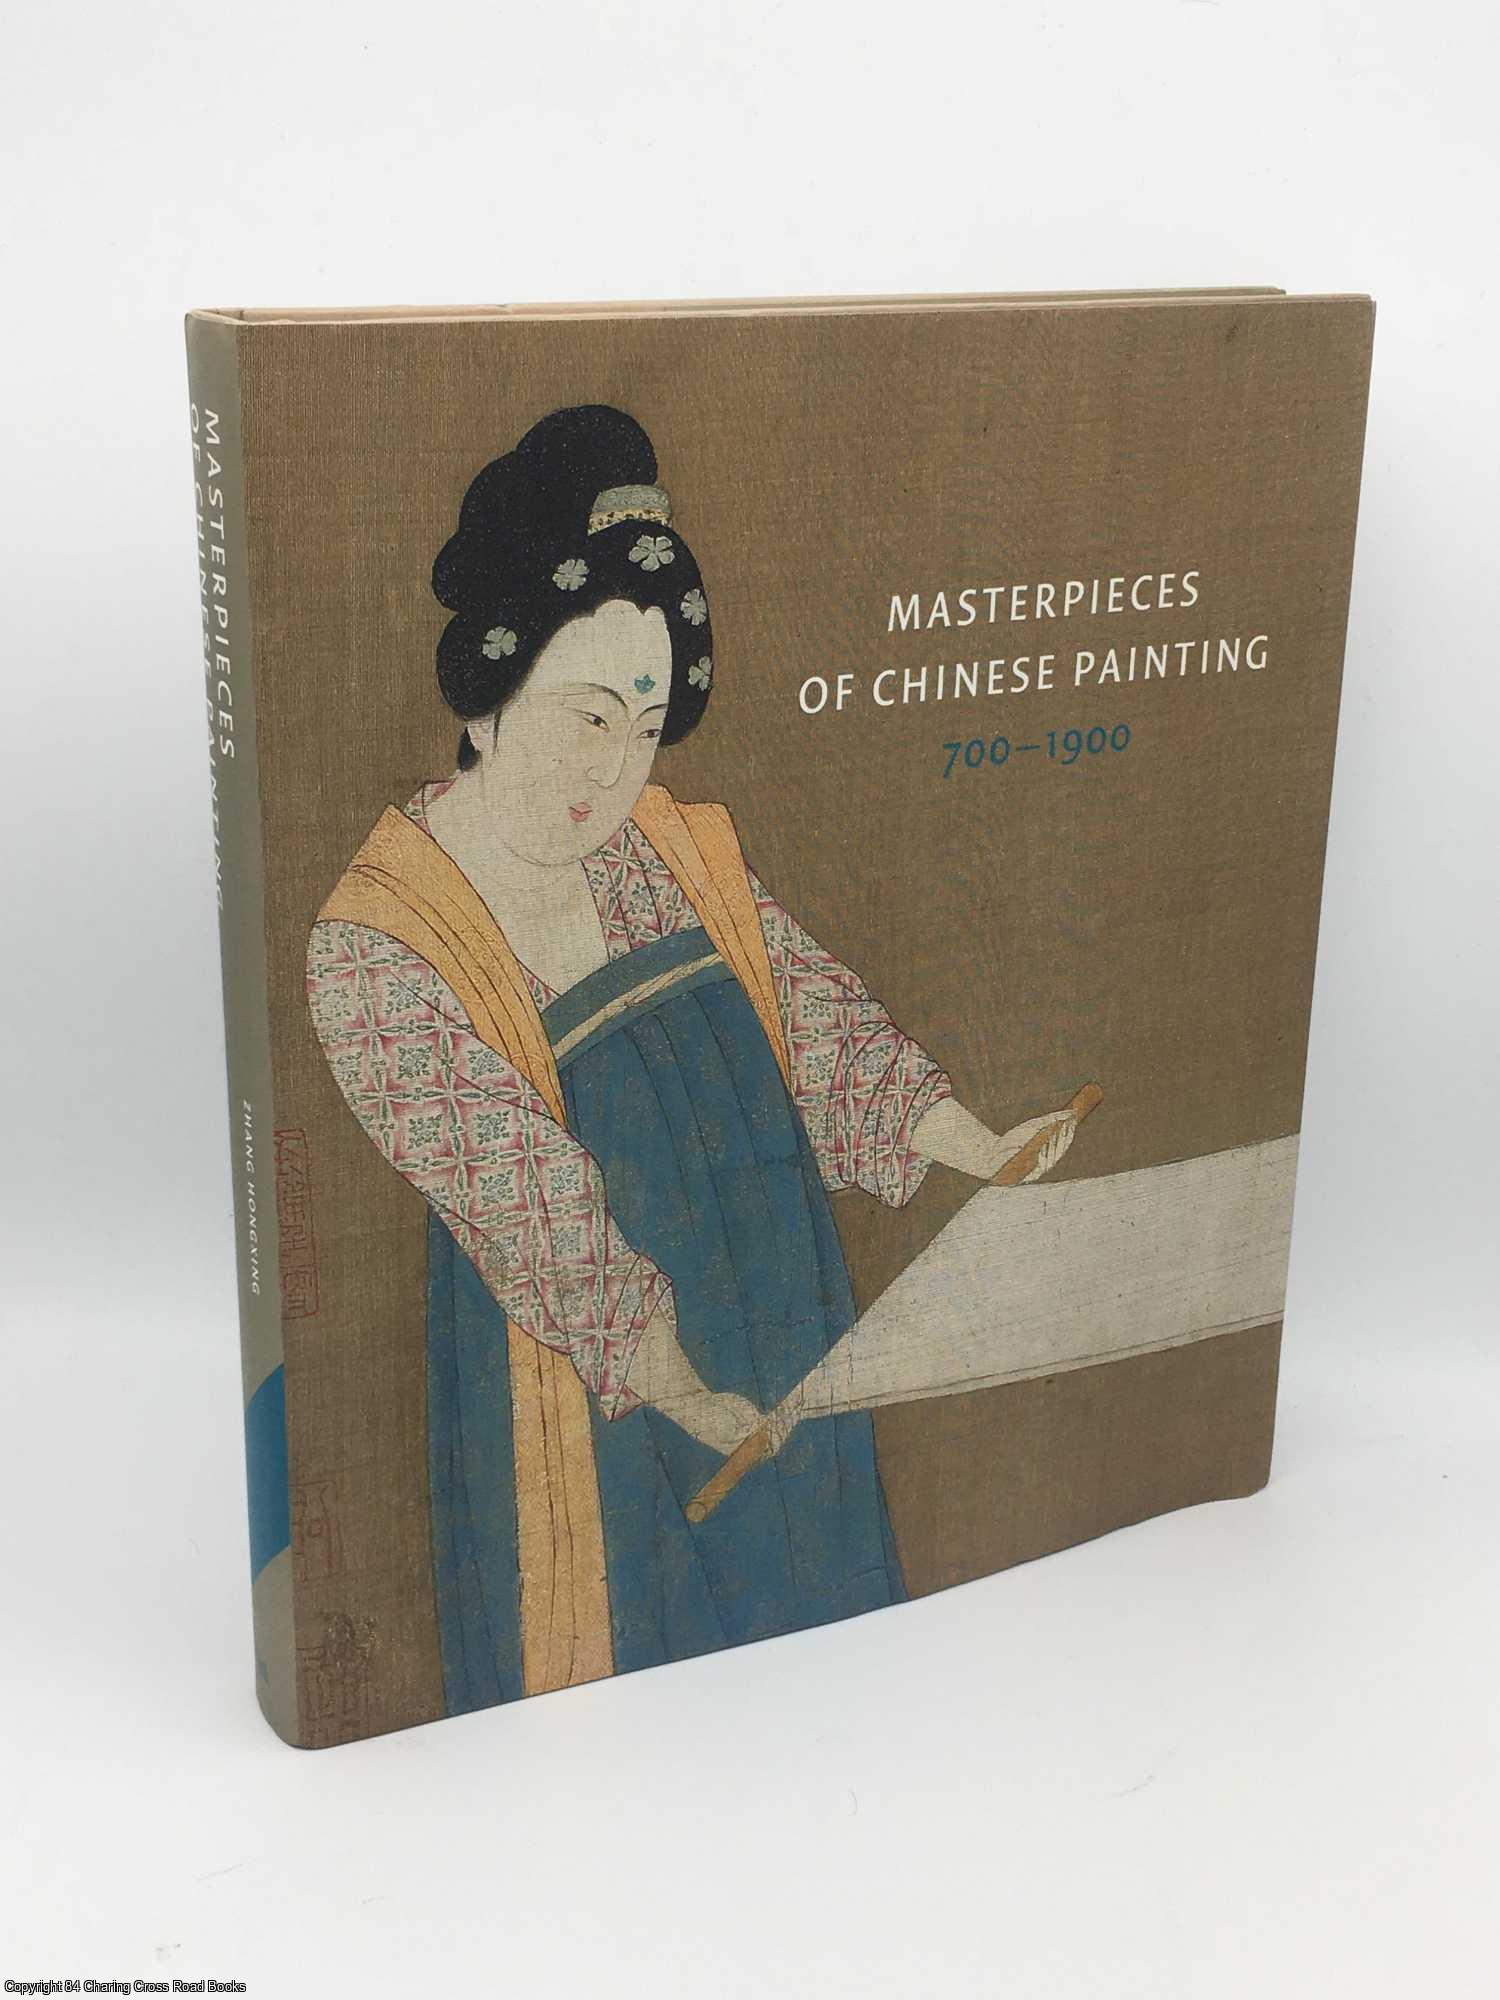 Zhang, Hongzing - Masterpieces Of Chinese Painting: 700-1900